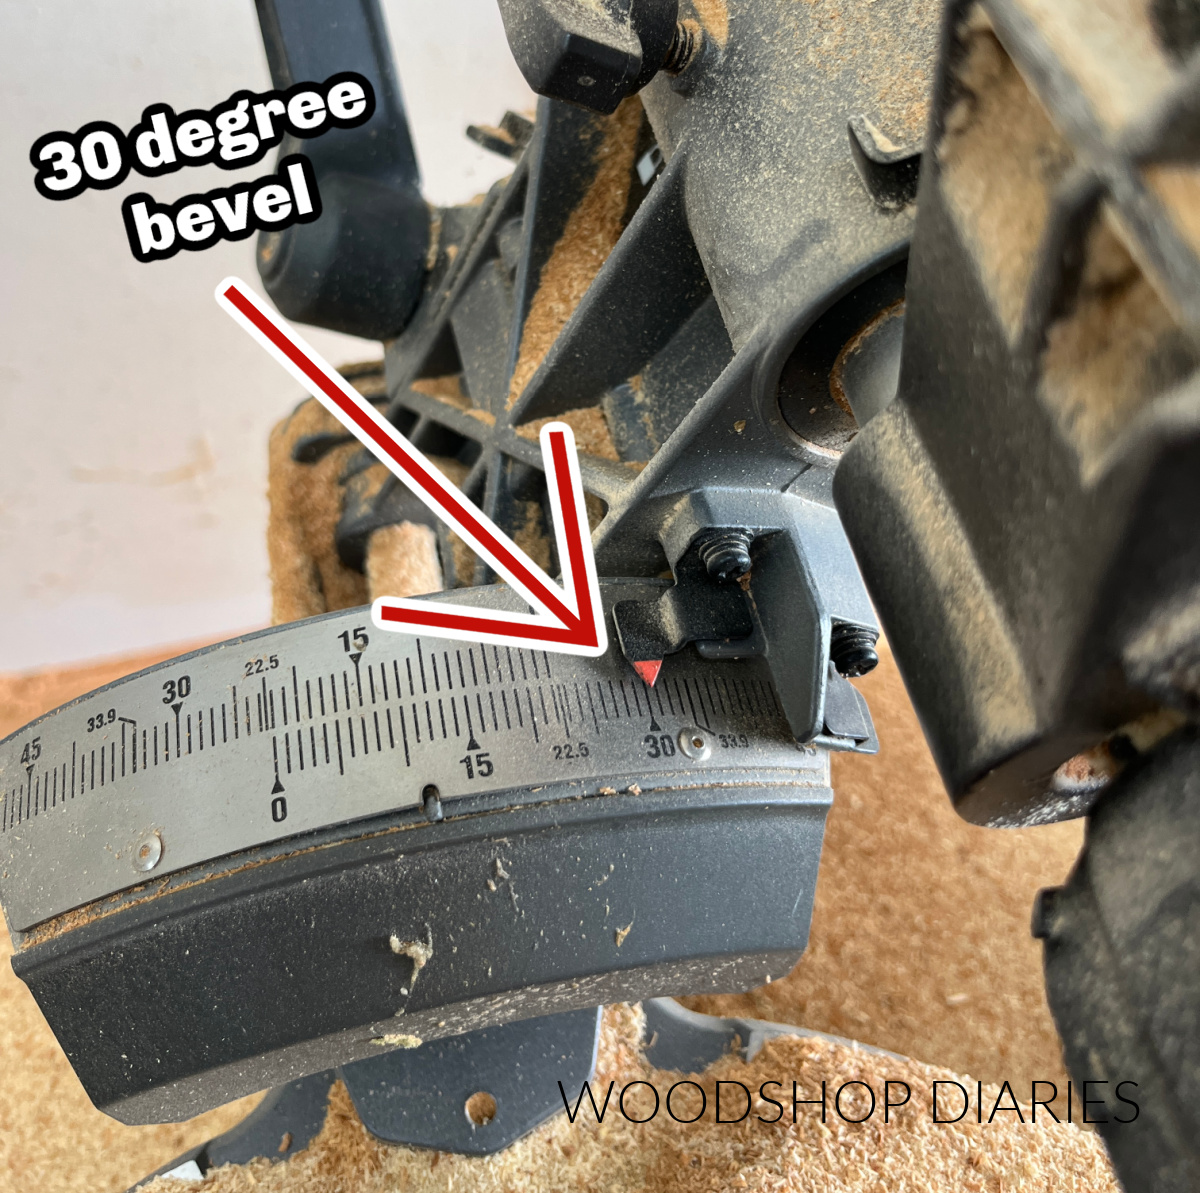 close up of bevel angle adjustment showing 30 degree bevel